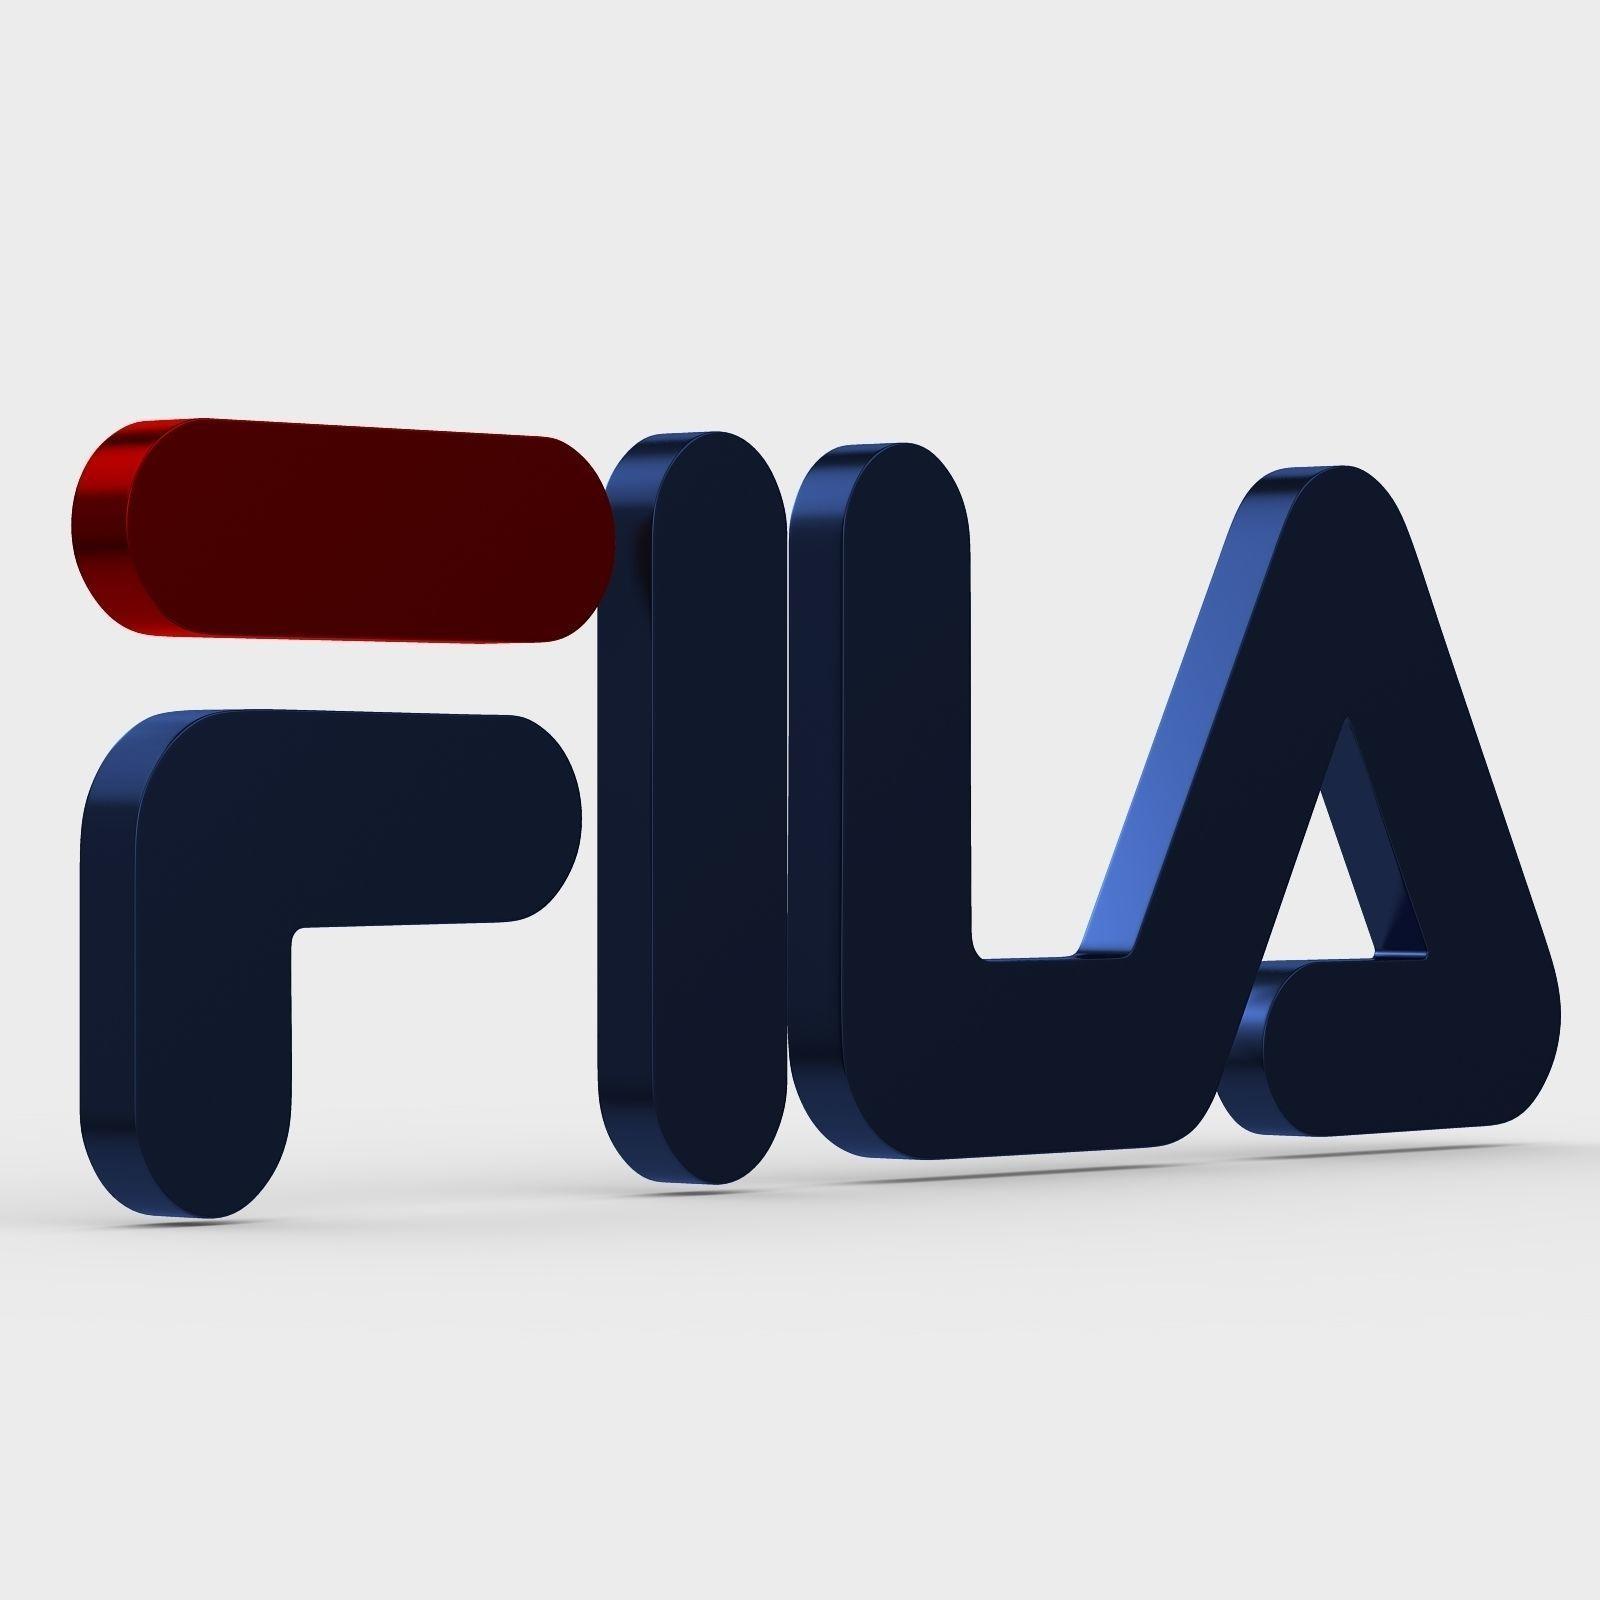 Fila Logo Wallpapers - Top Free Fila Backgrounds - WallpaperAccess